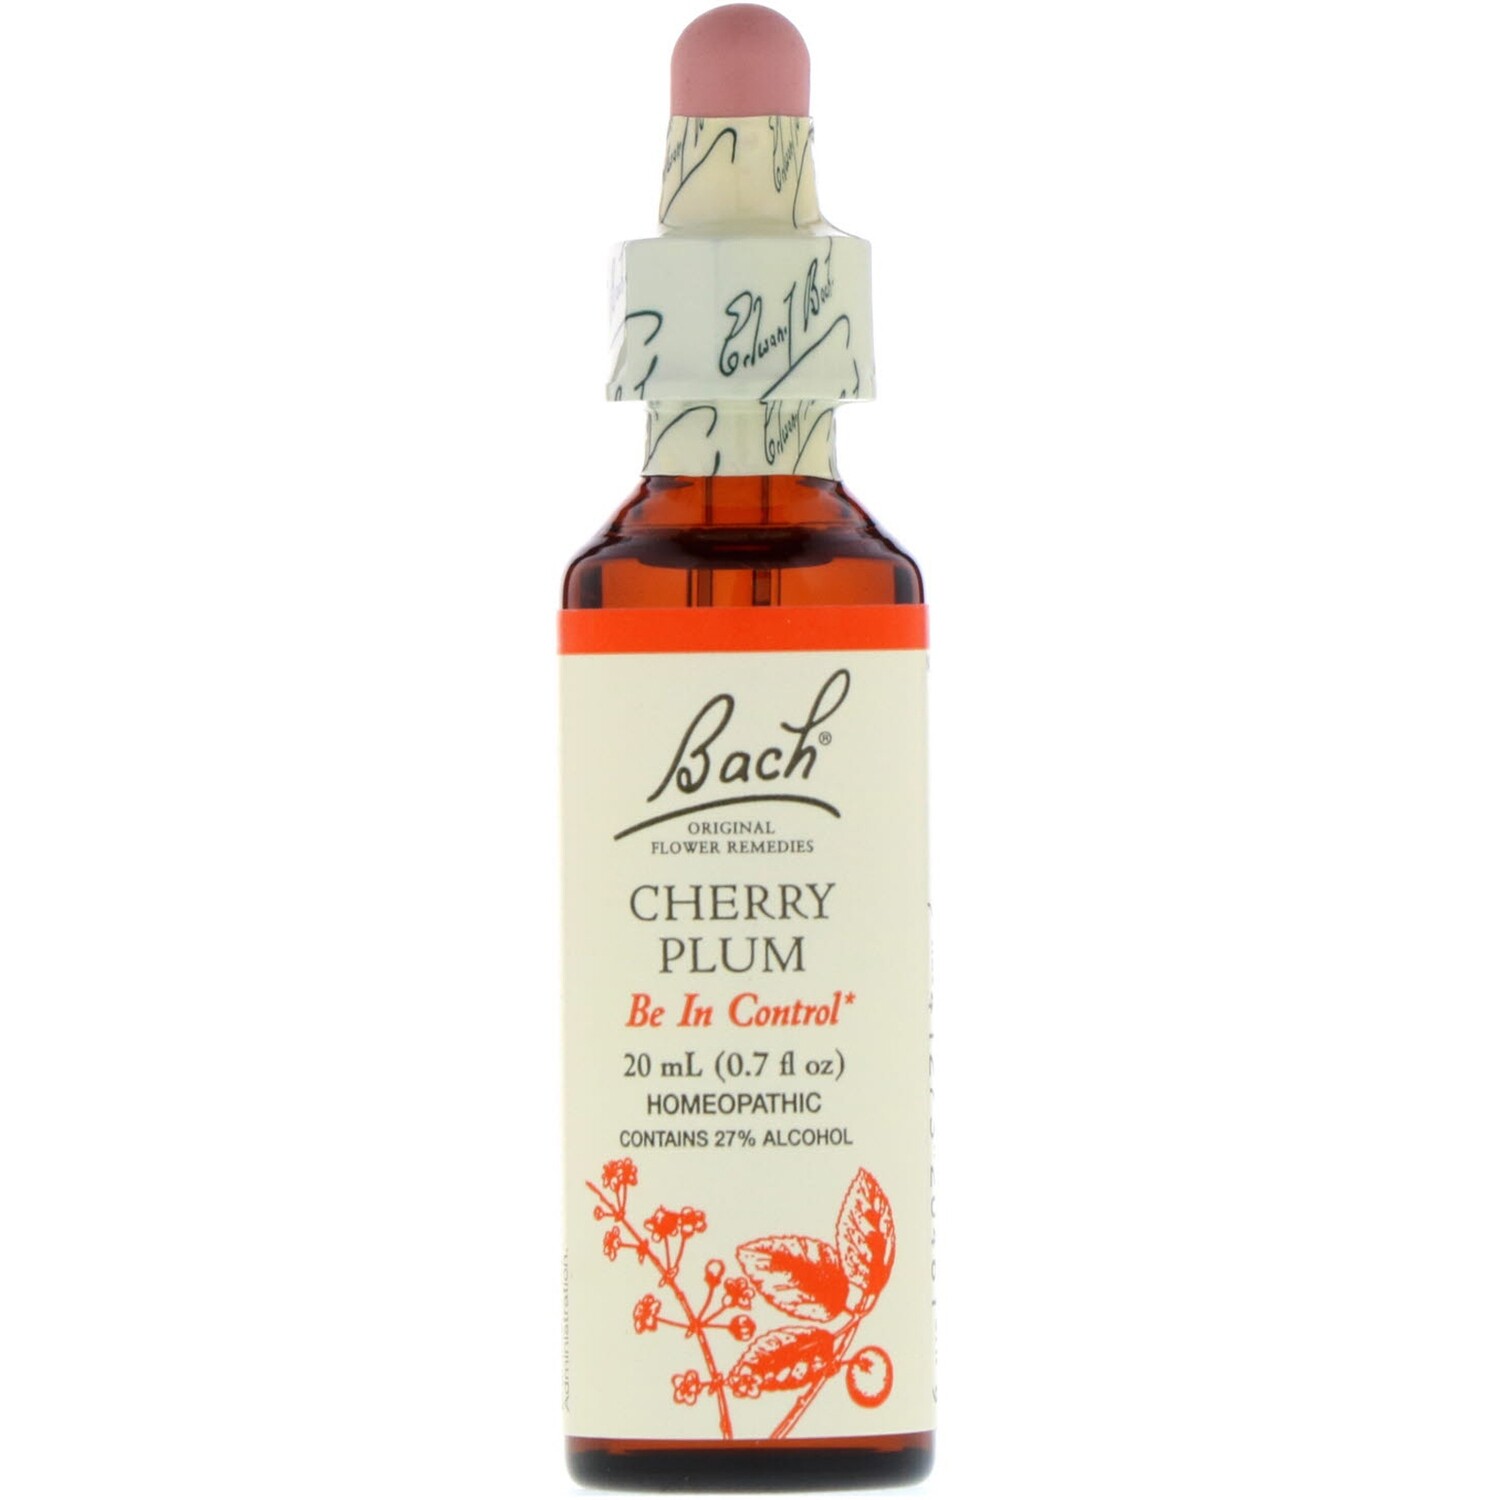 Cherry Plum Bach Flower Remedy 20 ml